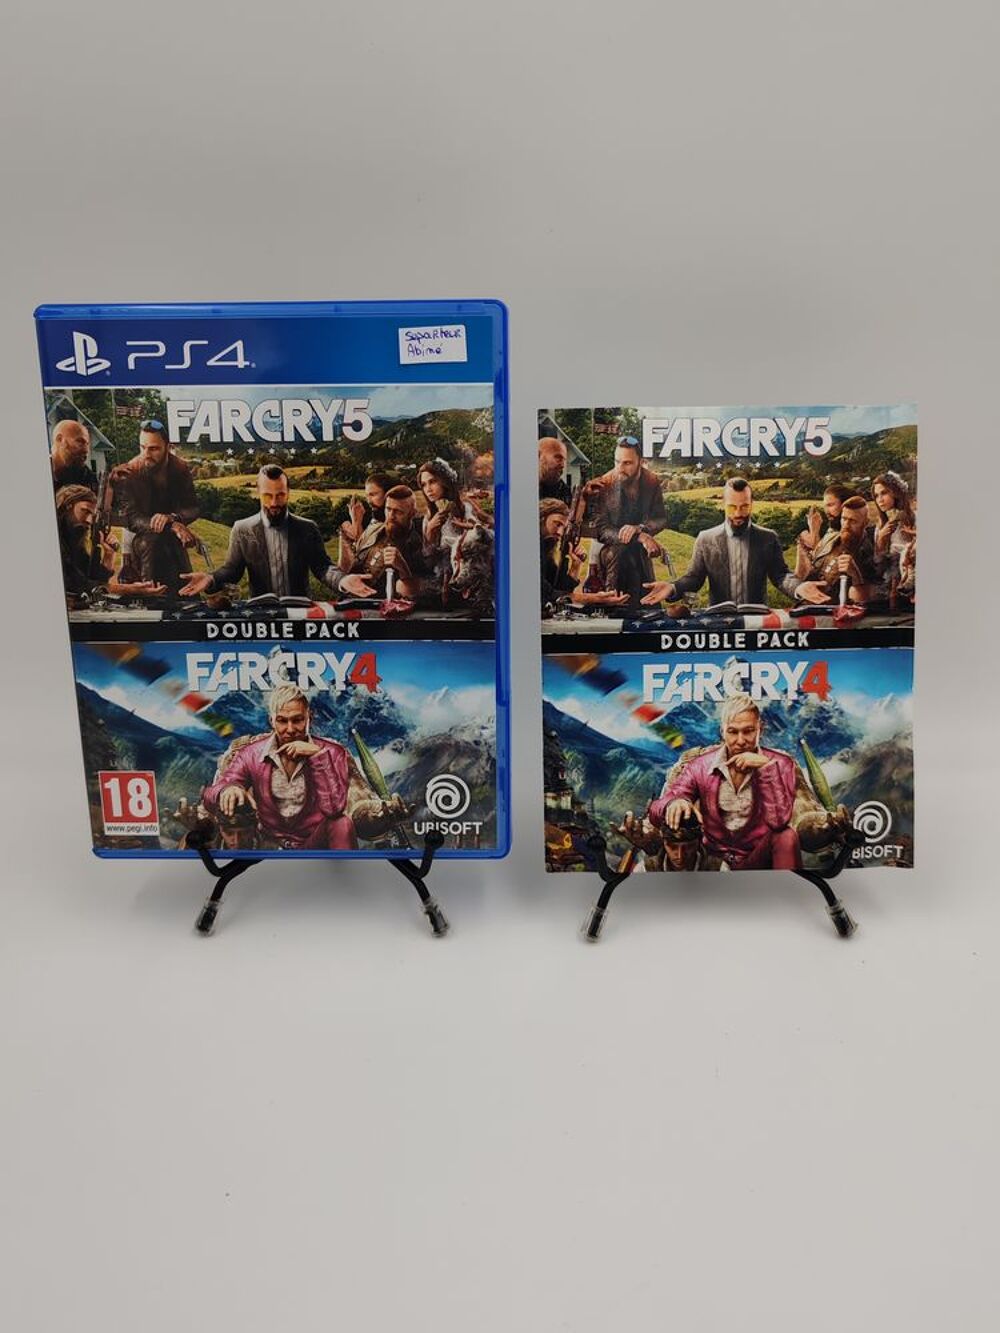 Jeu PS4 Playstation 4 Farcry 5 + Farcry 4 Double Pack comple Consoles et jeux vidos